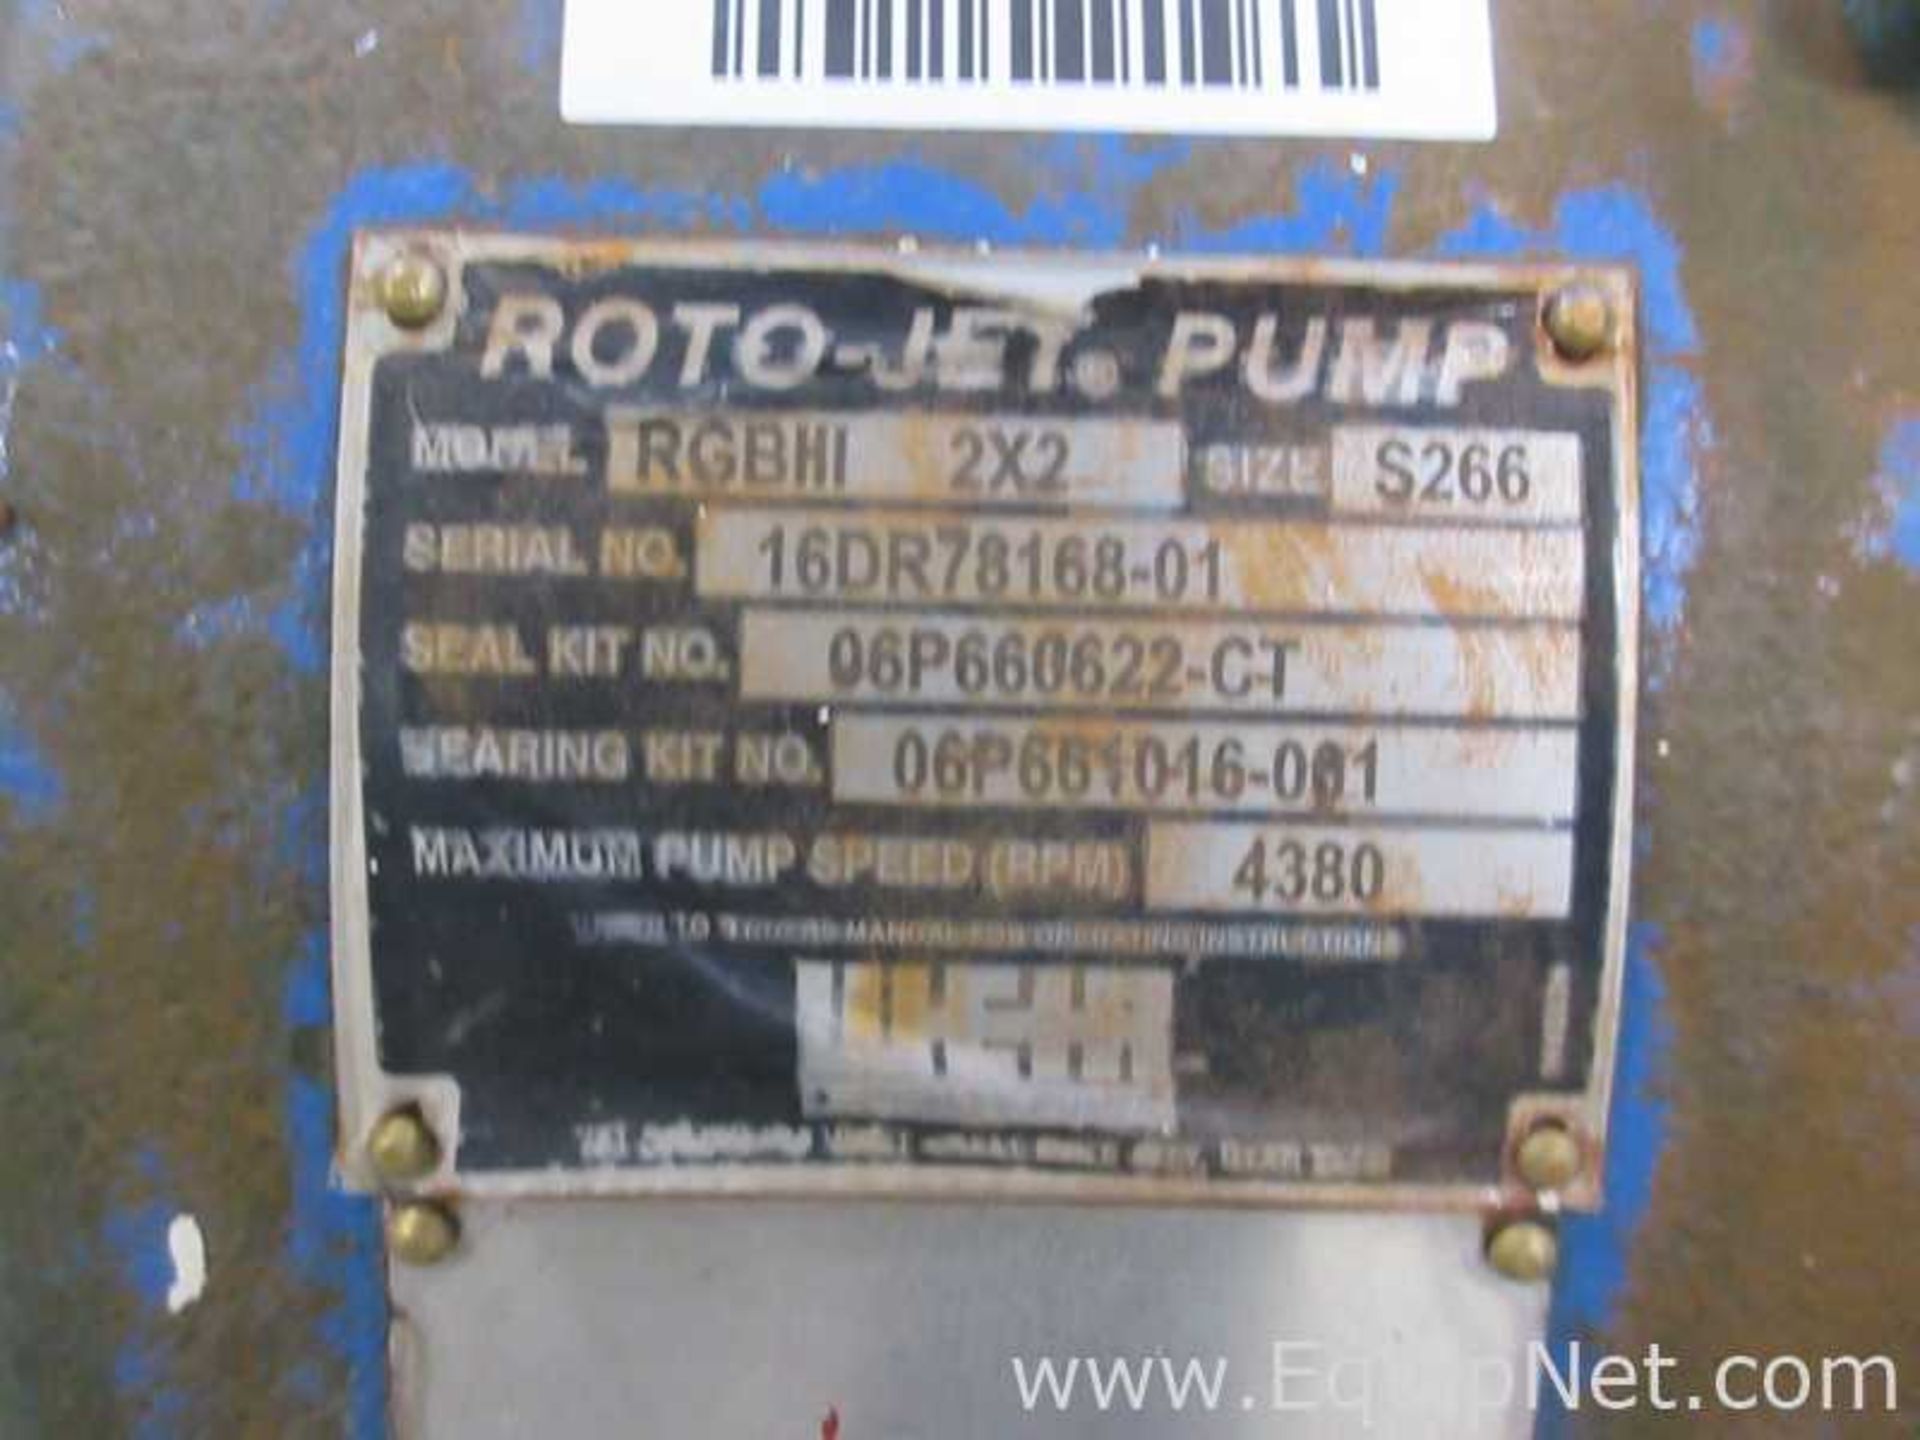 Weir Specialty Pumps RGBHI 2X2 Roto-Jet Centrifugal Pump - Image 4 of 7